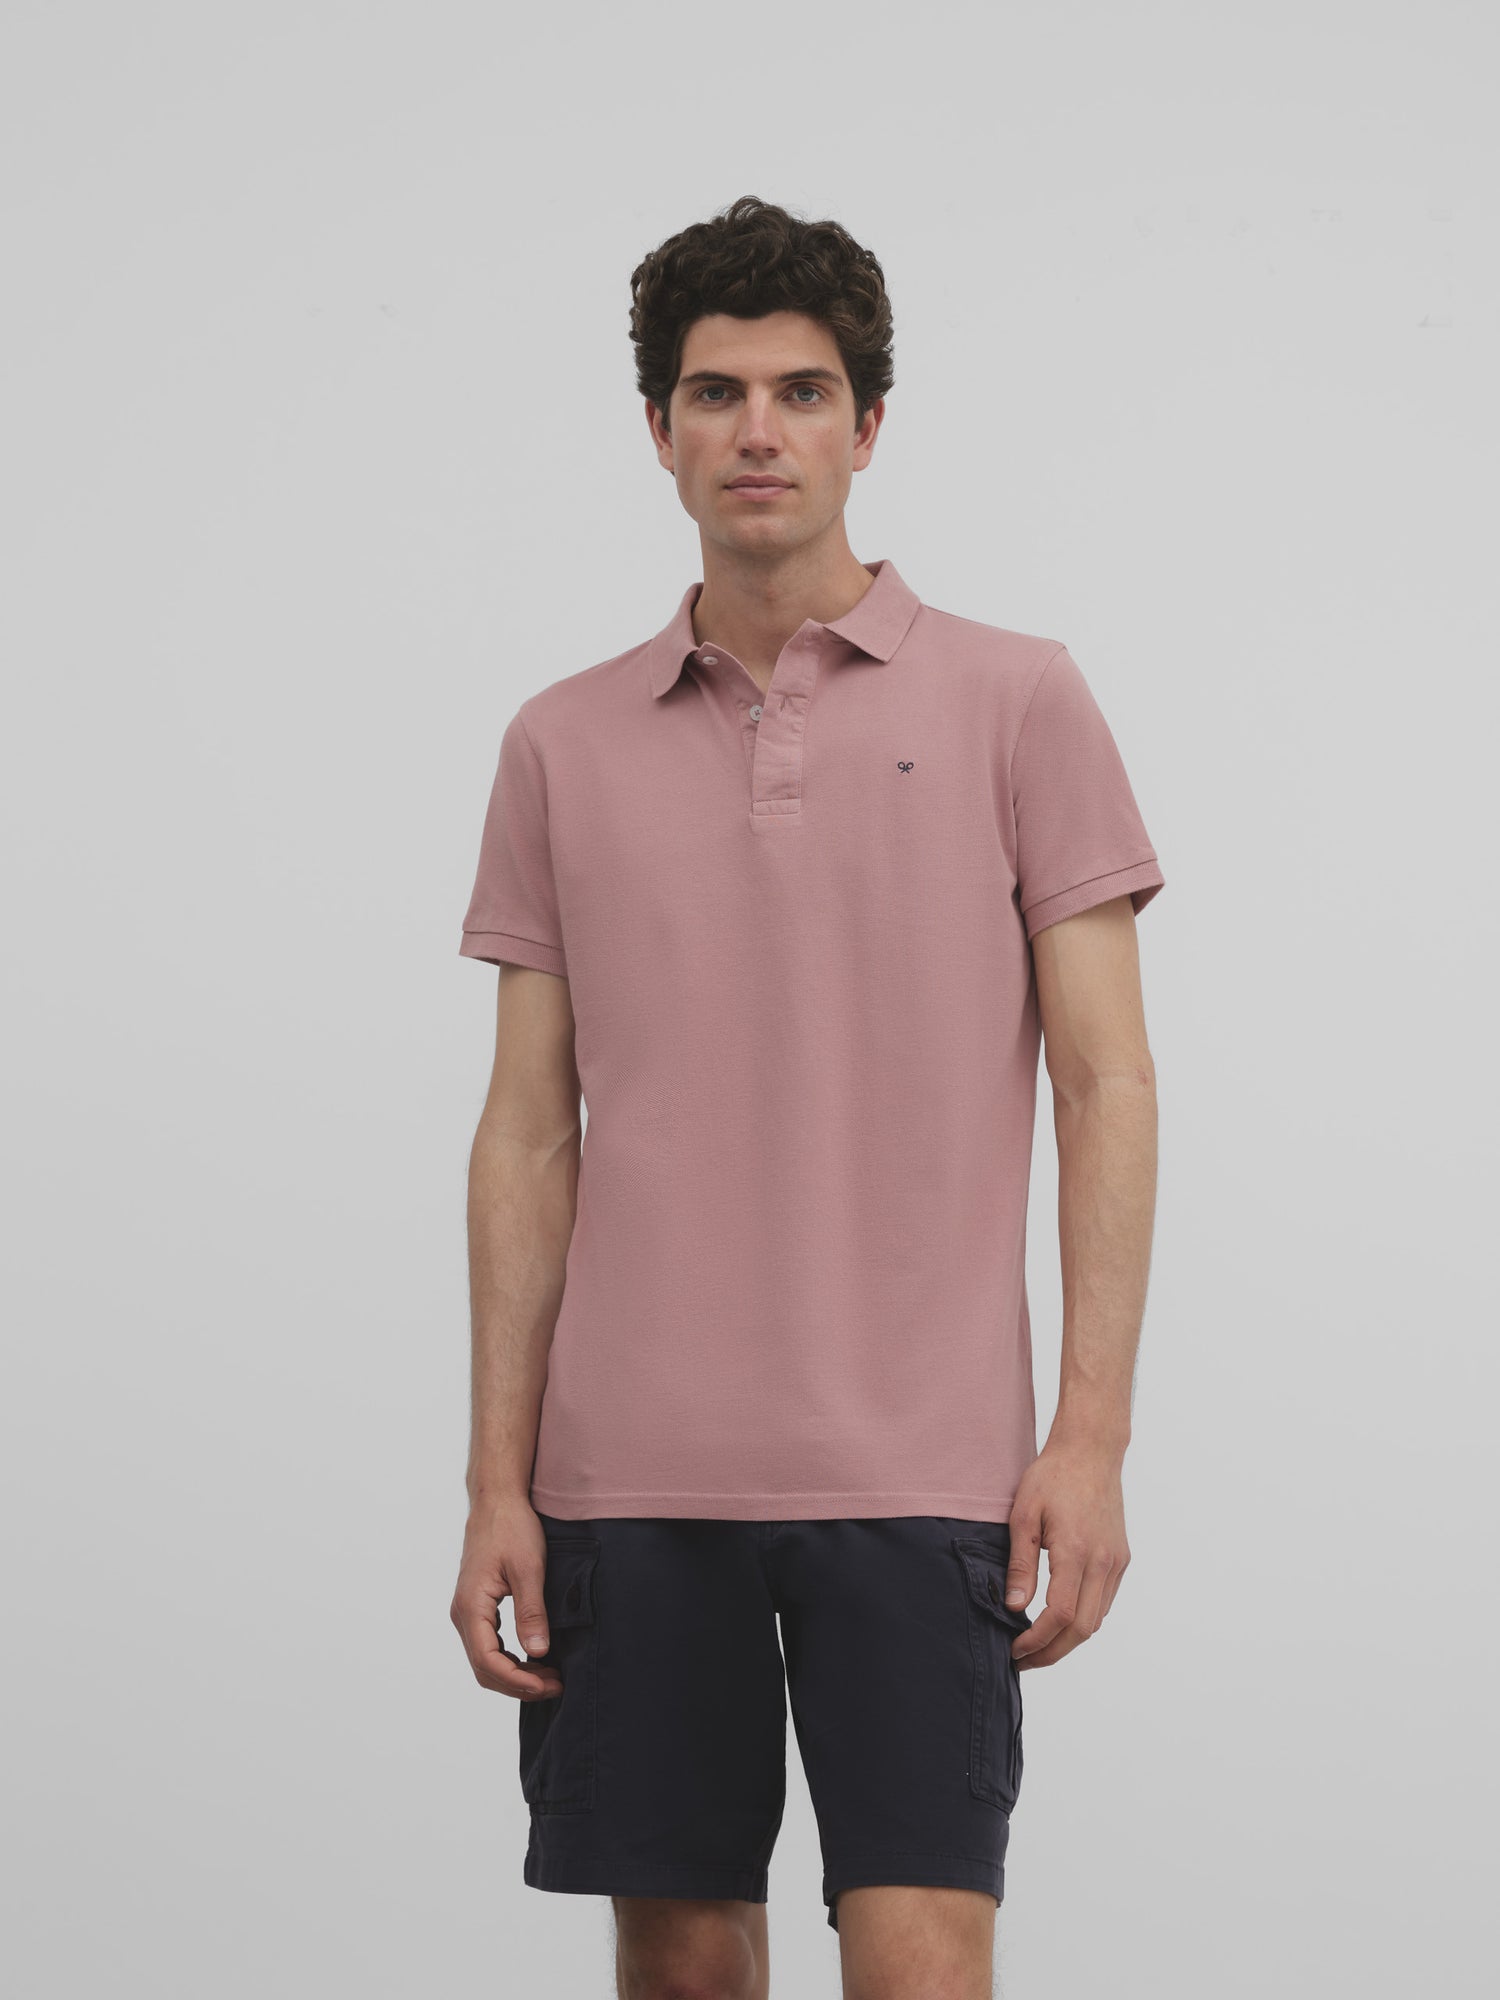 Classic plain pink polo shirt